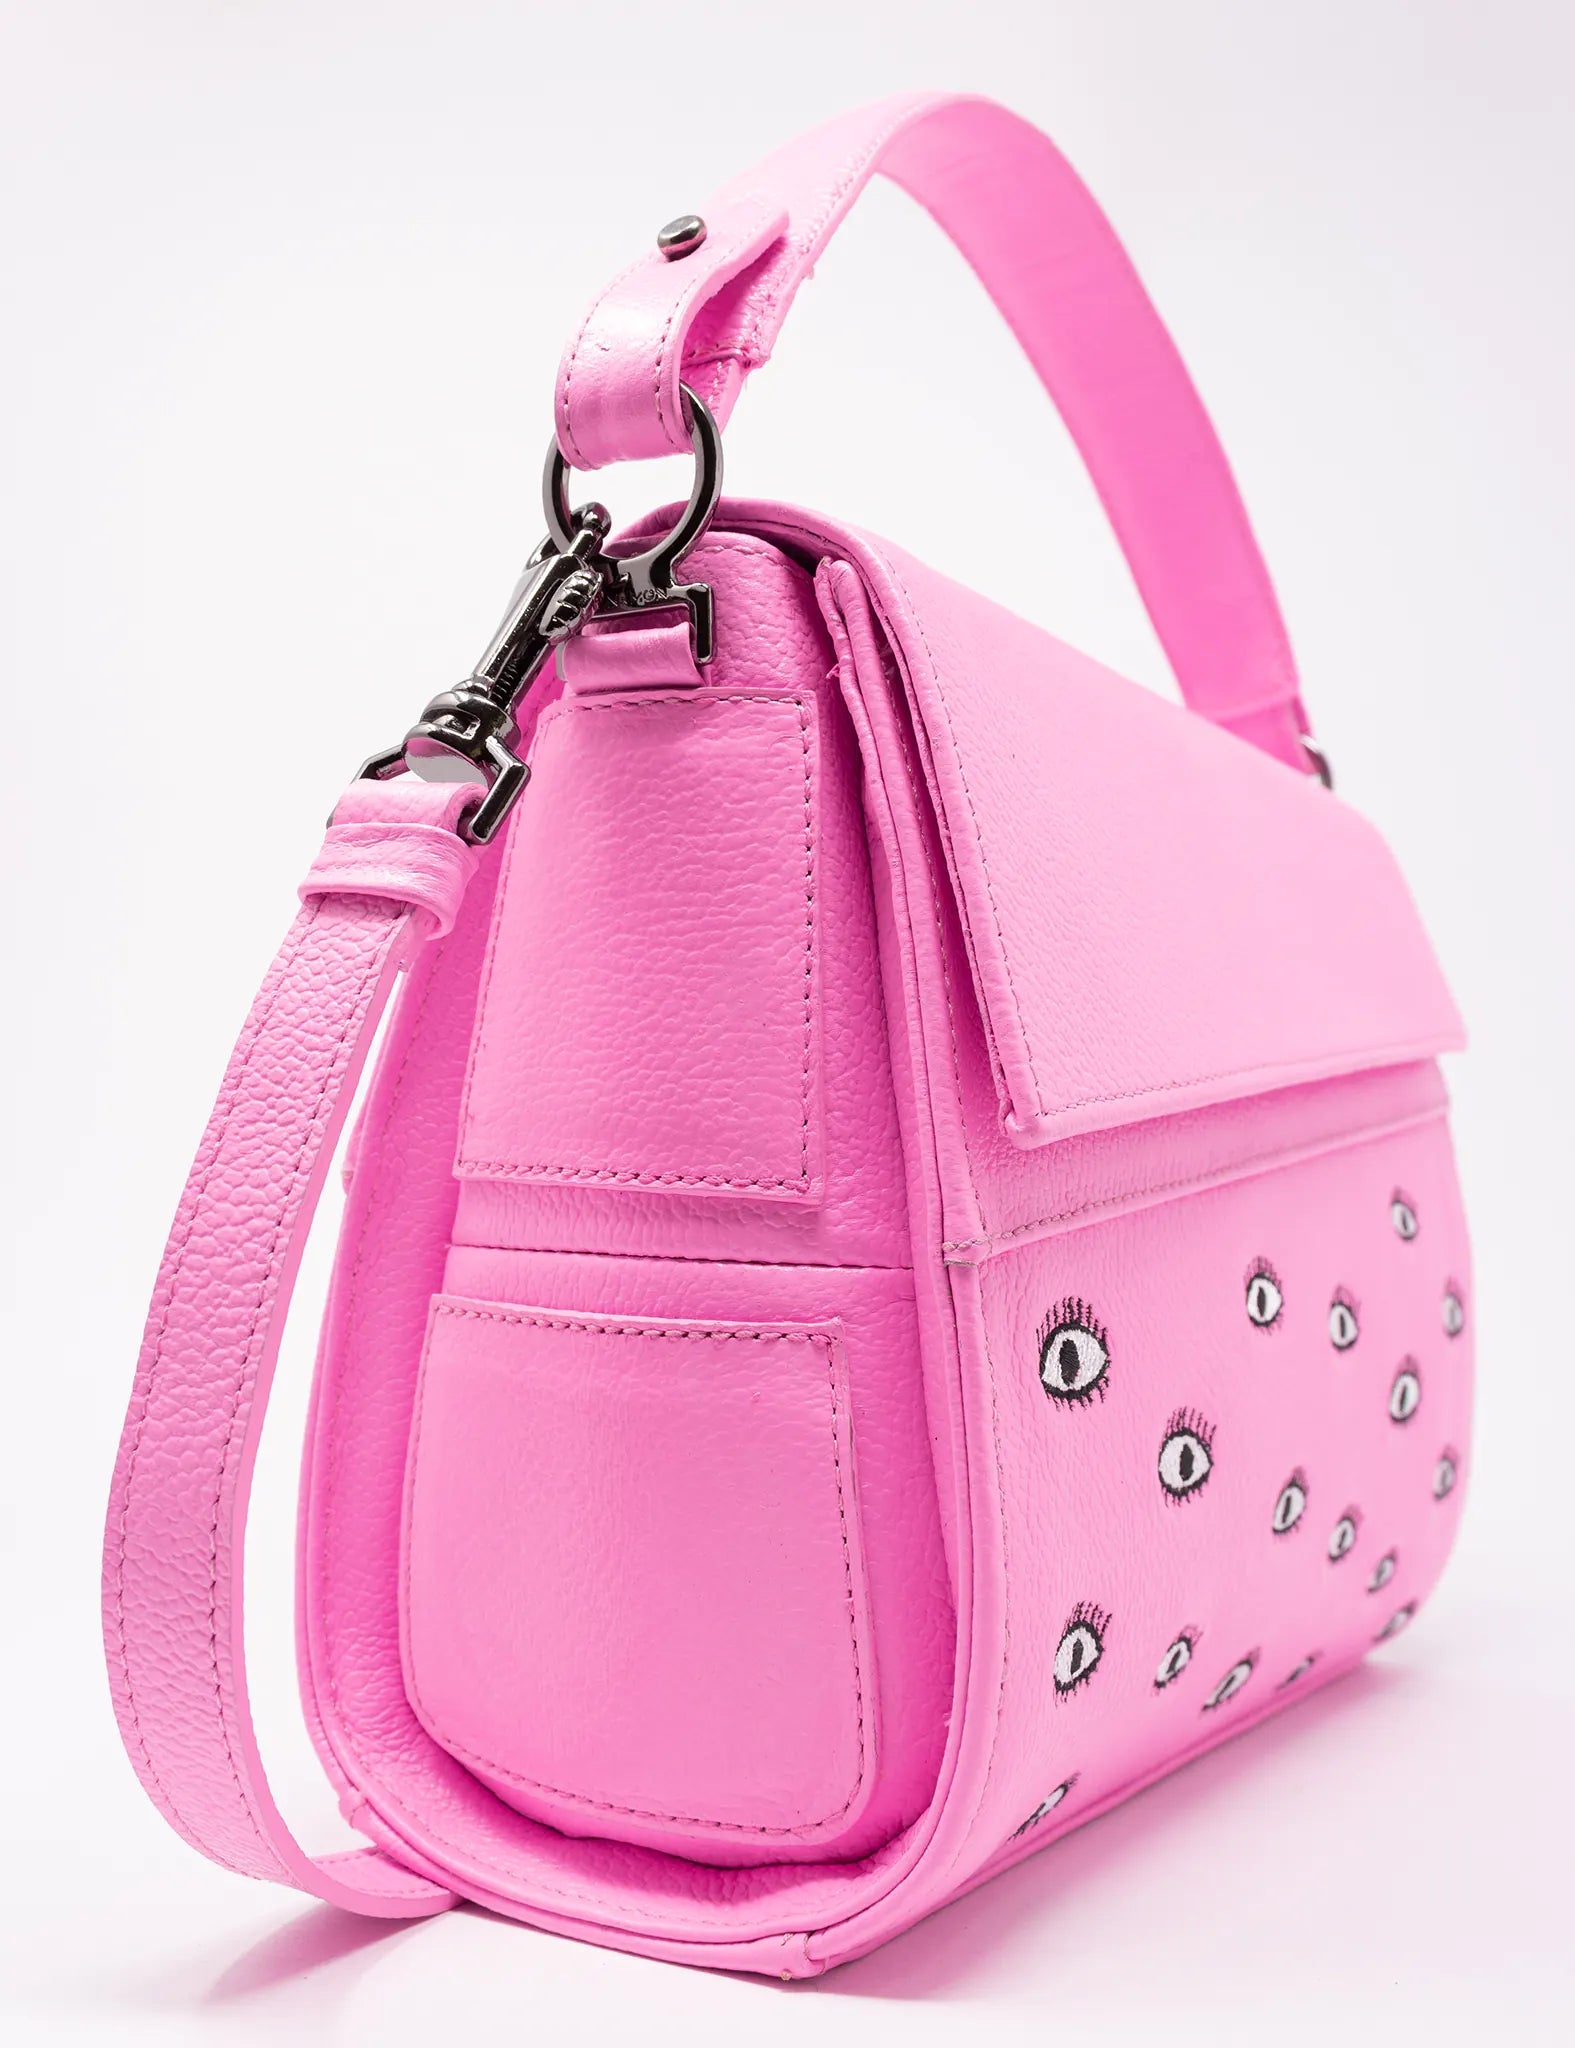 Anastasio Mini Crossbody Handbag Bubblegum Pink Leather - All Over Eyes Embroidery - Side view